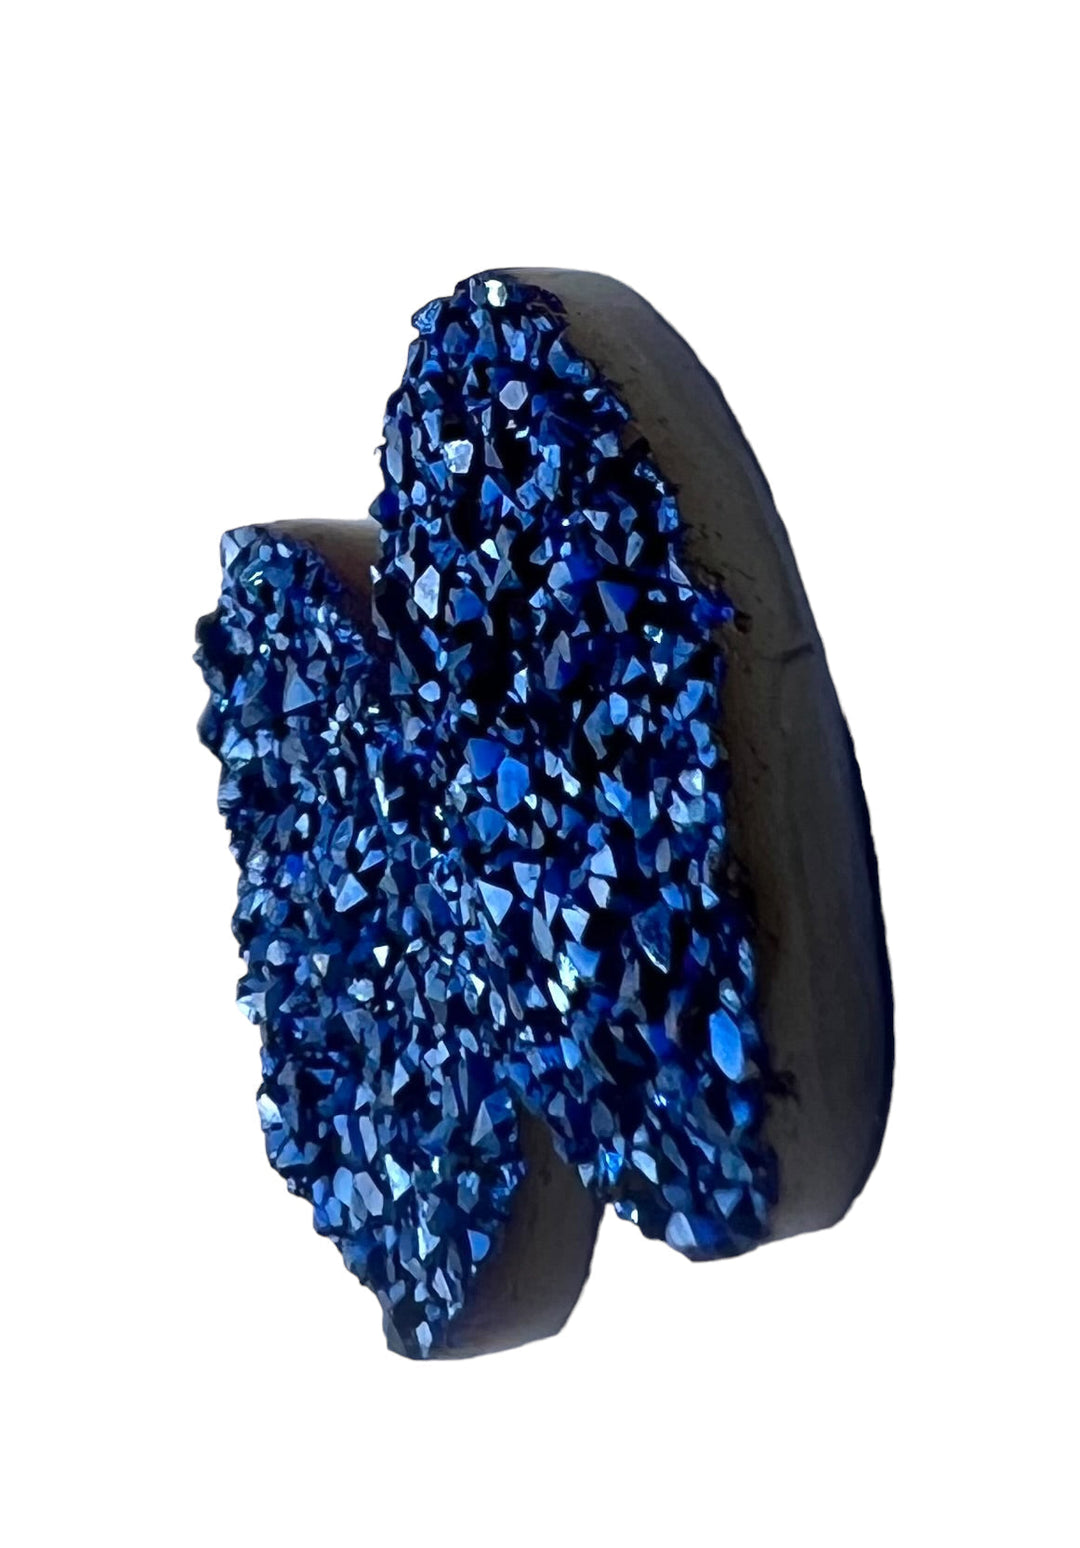 Beautiful Blue Druzy with Titanium Coating Oval Cabochon